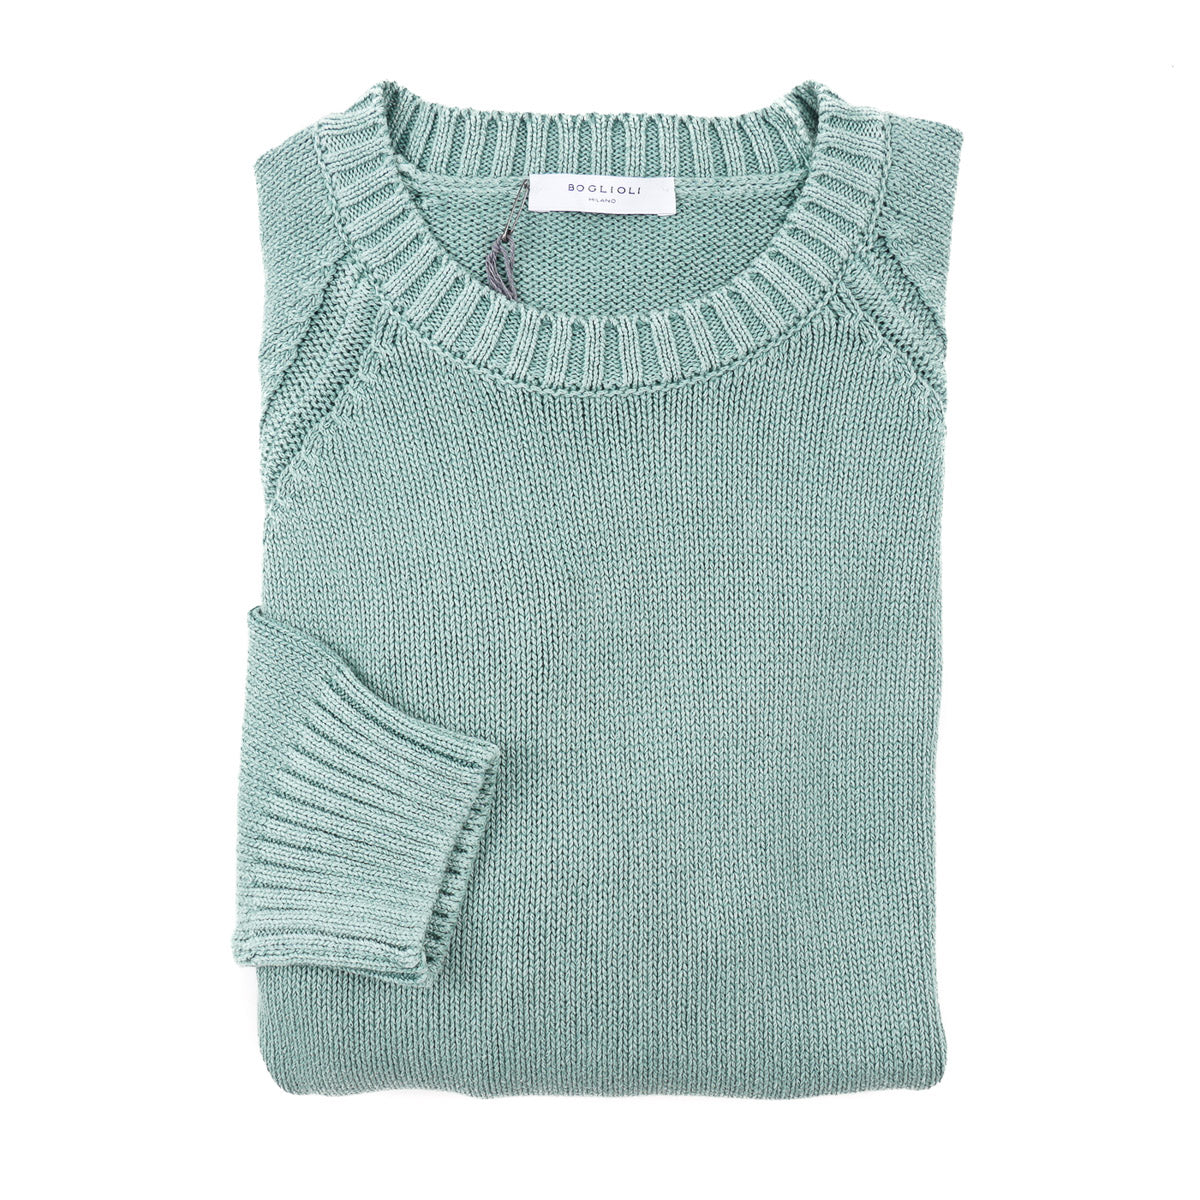 Boglioli Heavier Knit Cotton Sweater - Top Shelf Apparel